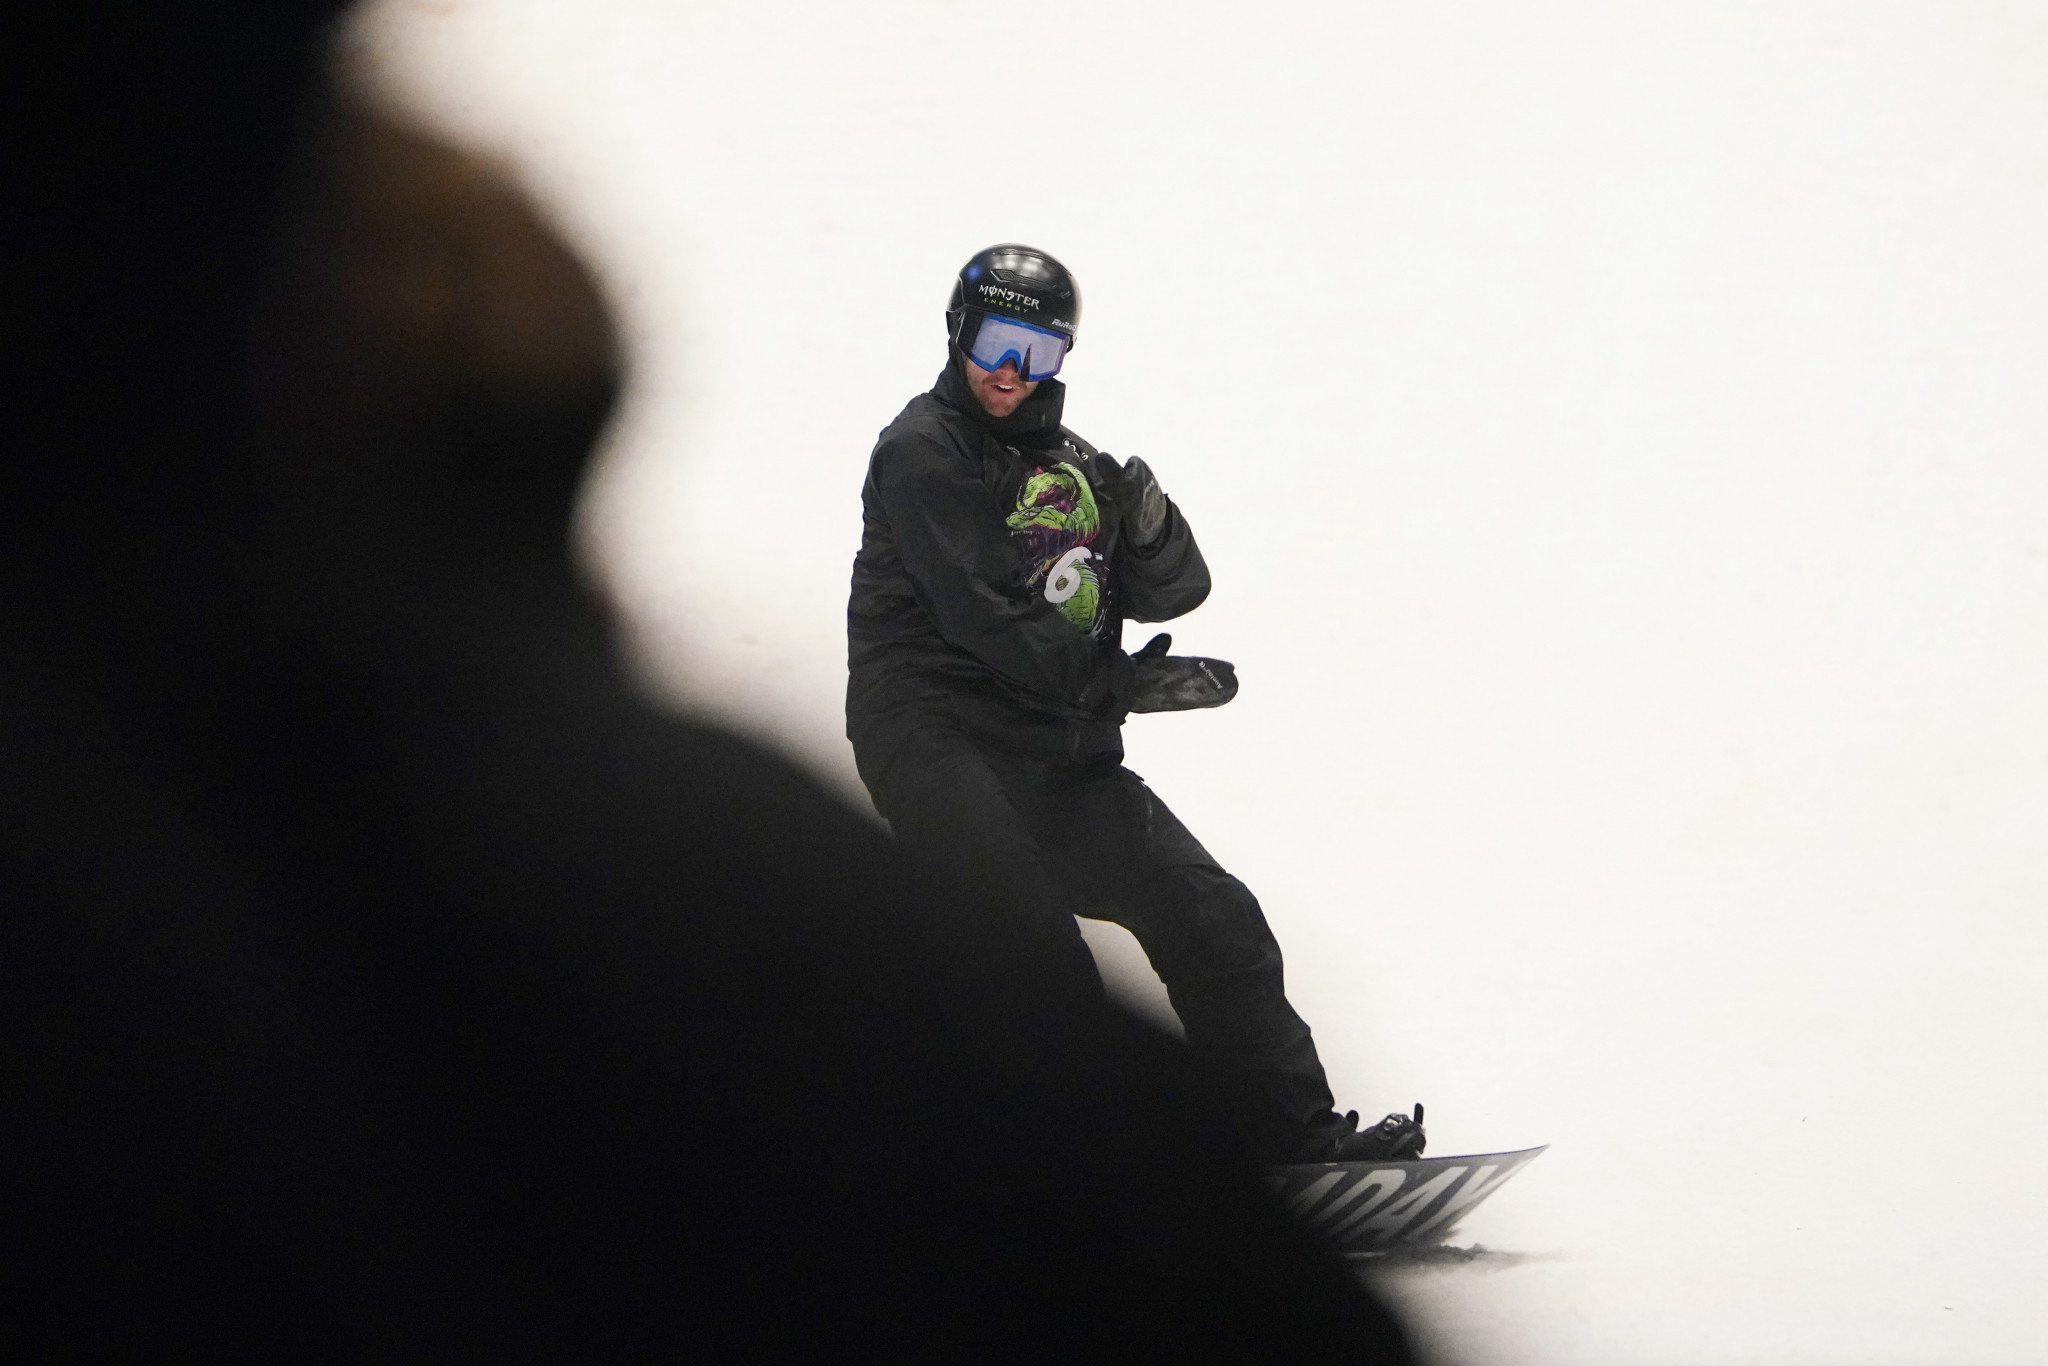 Parrot adapts training ahead of new snowboard season